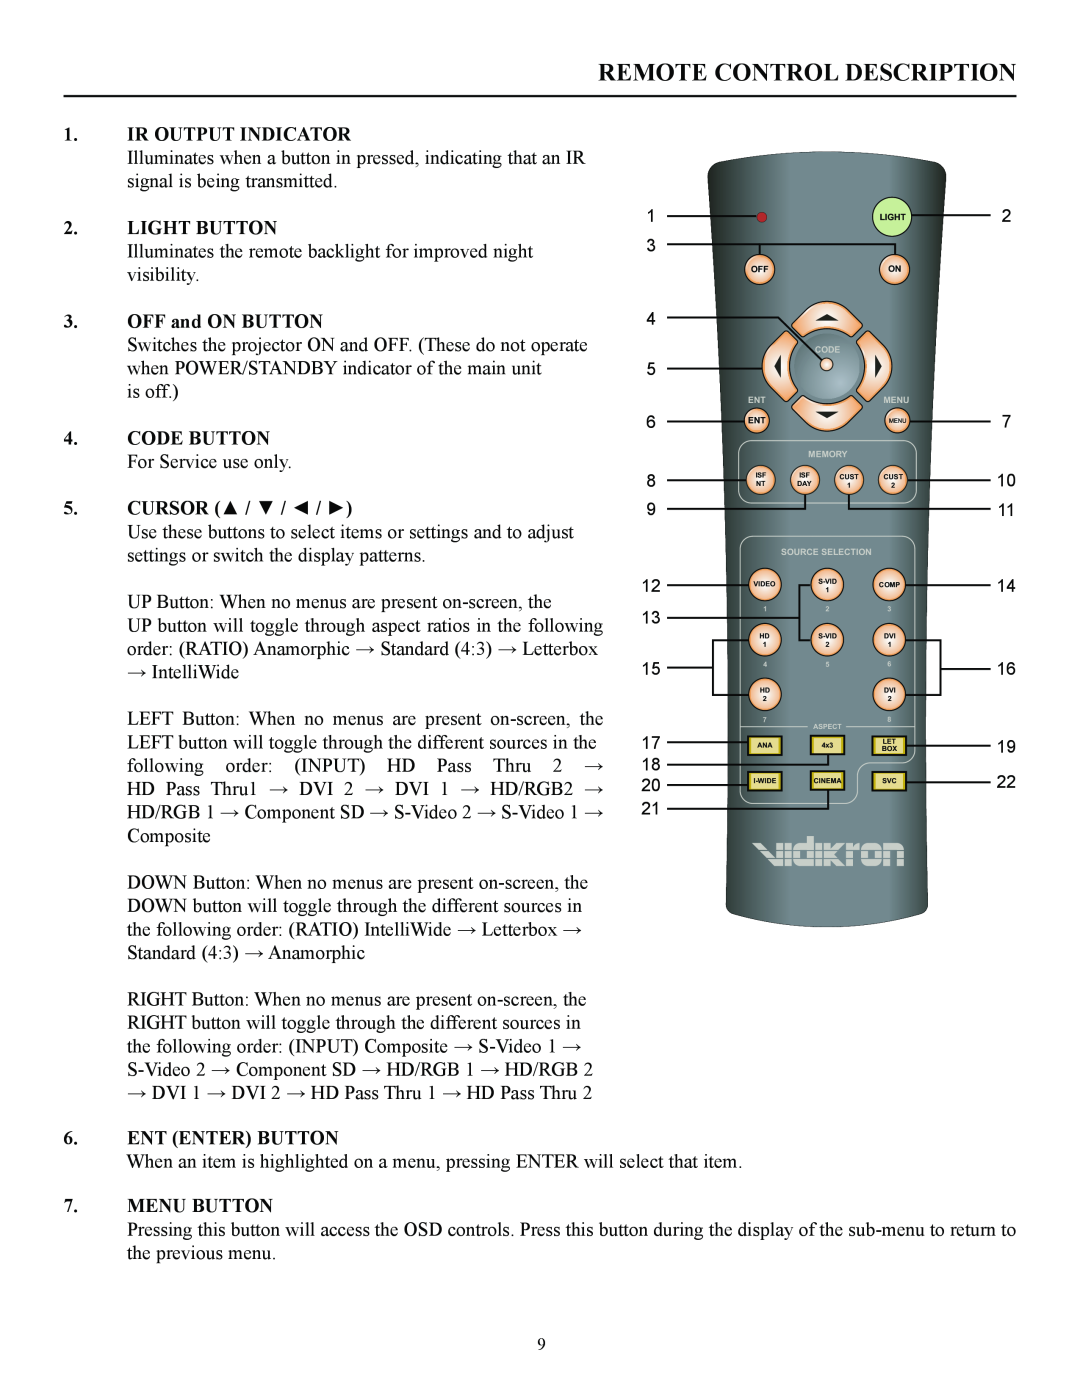 Vidikron 100 manual Remote Control Description, Ir Output Indicator, Light Button, OFF and ON BUTTON, Ent Enter Button 